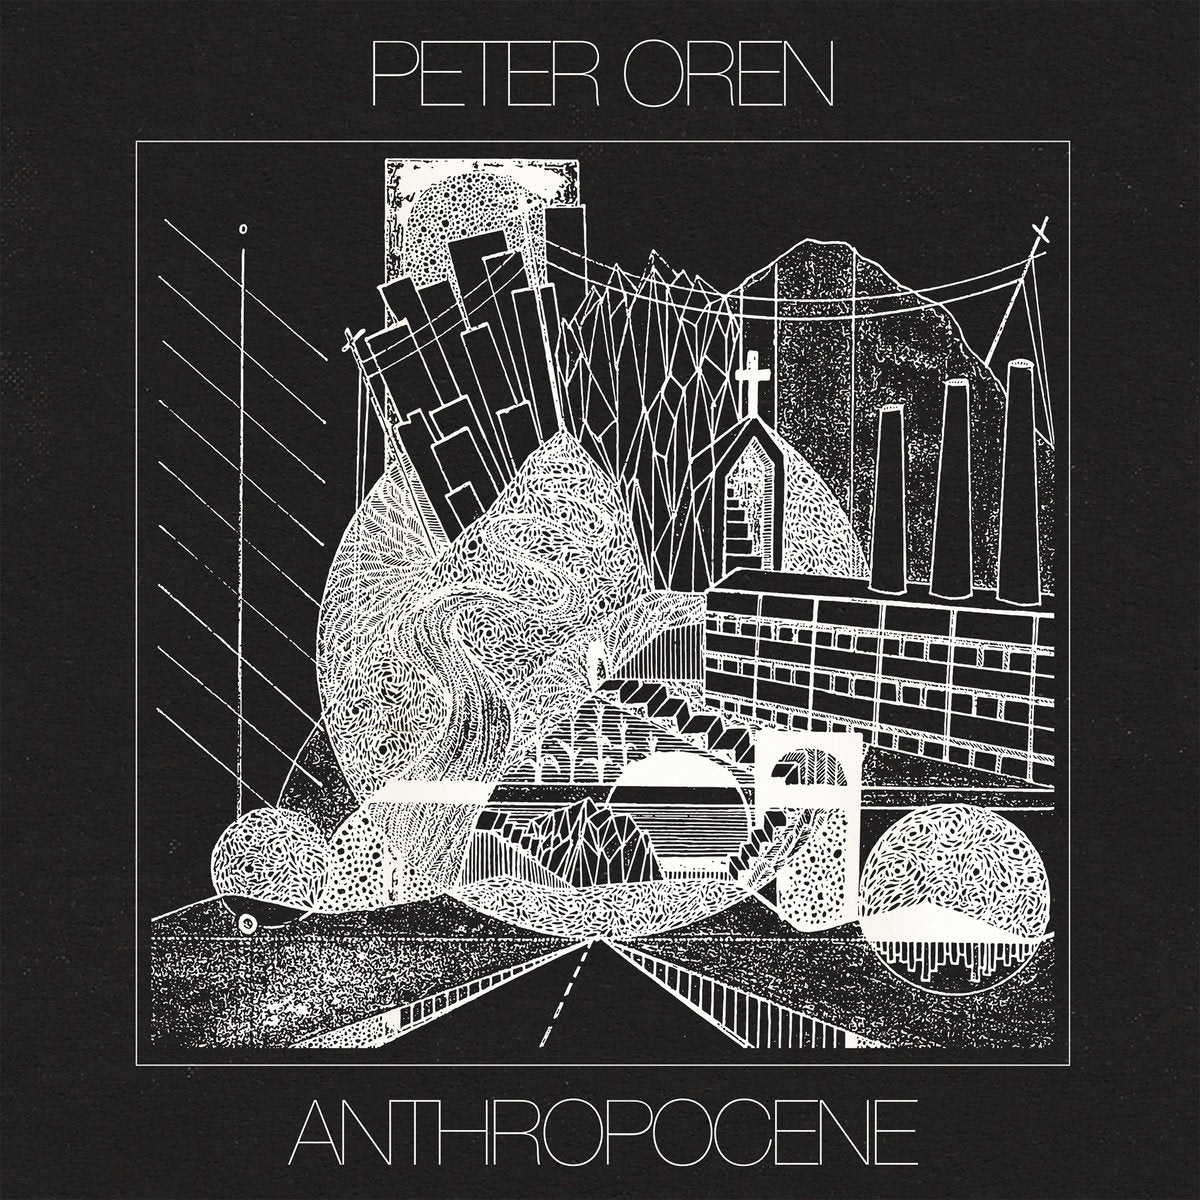 Peter Oren - Anthropocene LP (Ltd Clear w/ Black Splatter Vinyl Edition)